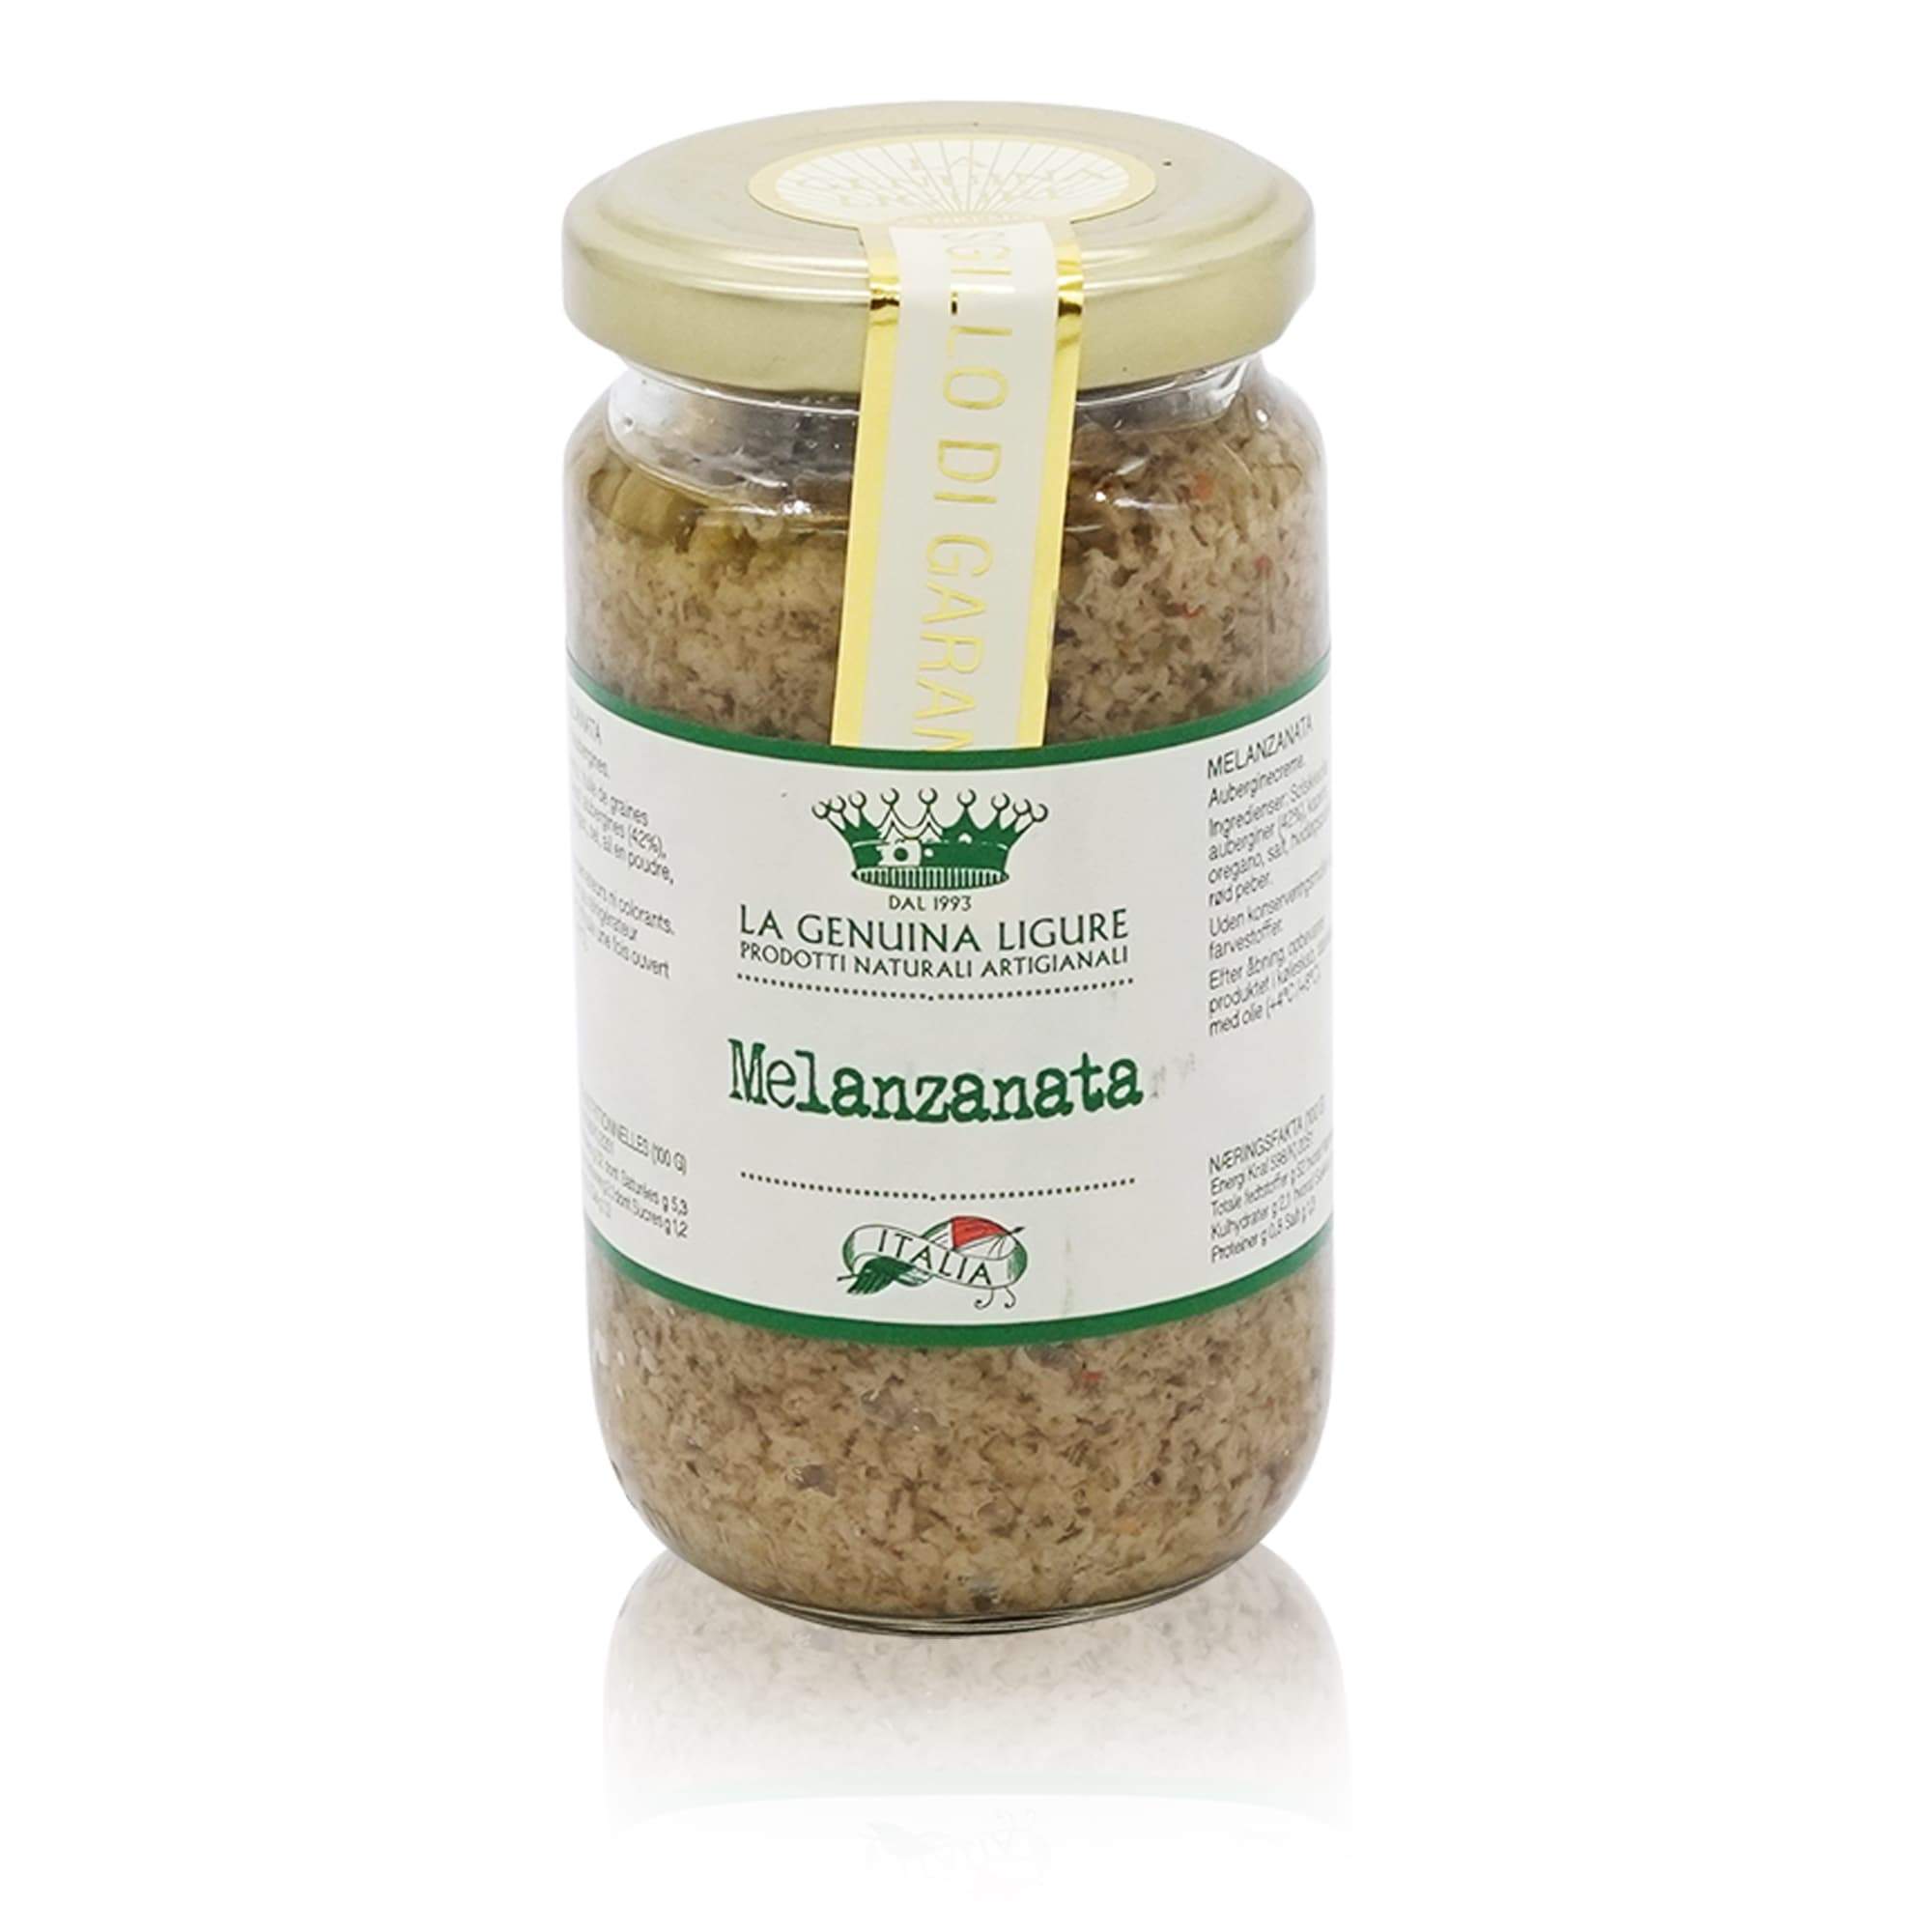 La Genuina Ligure Melanzanata – Fertigsauce auf Auberginenbasis - 0,18kg - italienisch-einkaufen.de